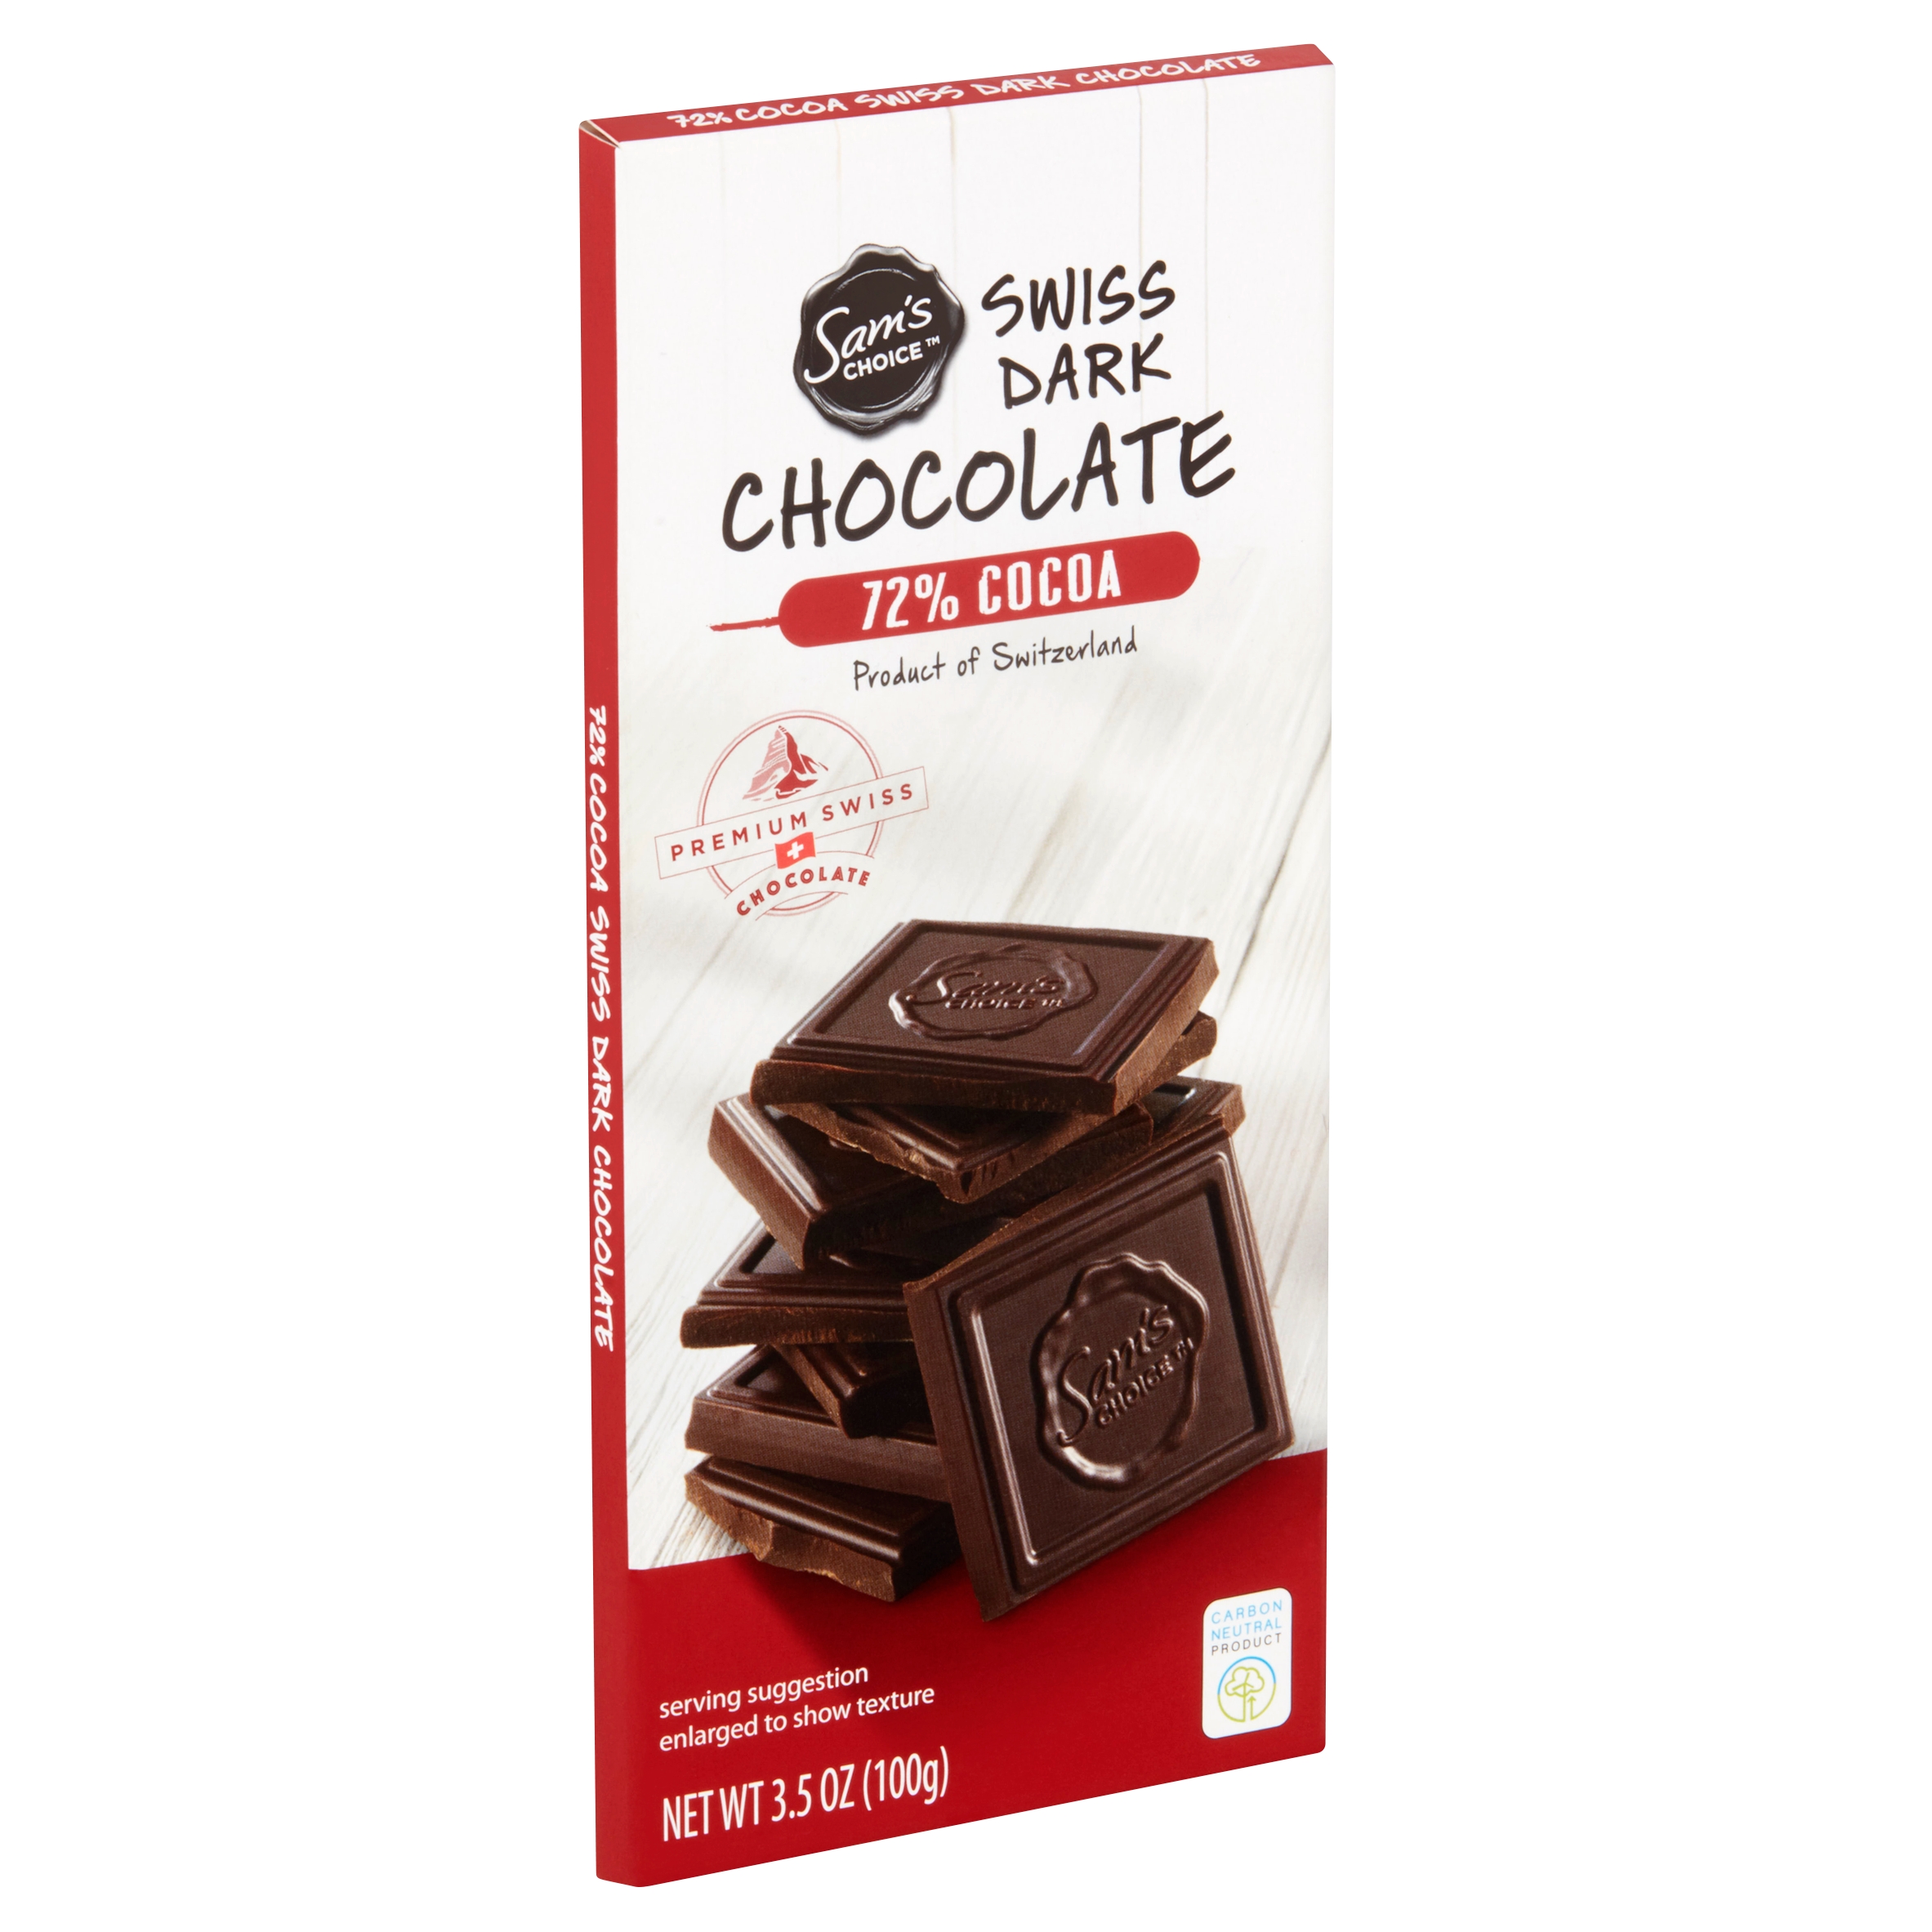 Sam's Choice 72% Cocoa Swiss Dark Chocolate, 3.5 Oz